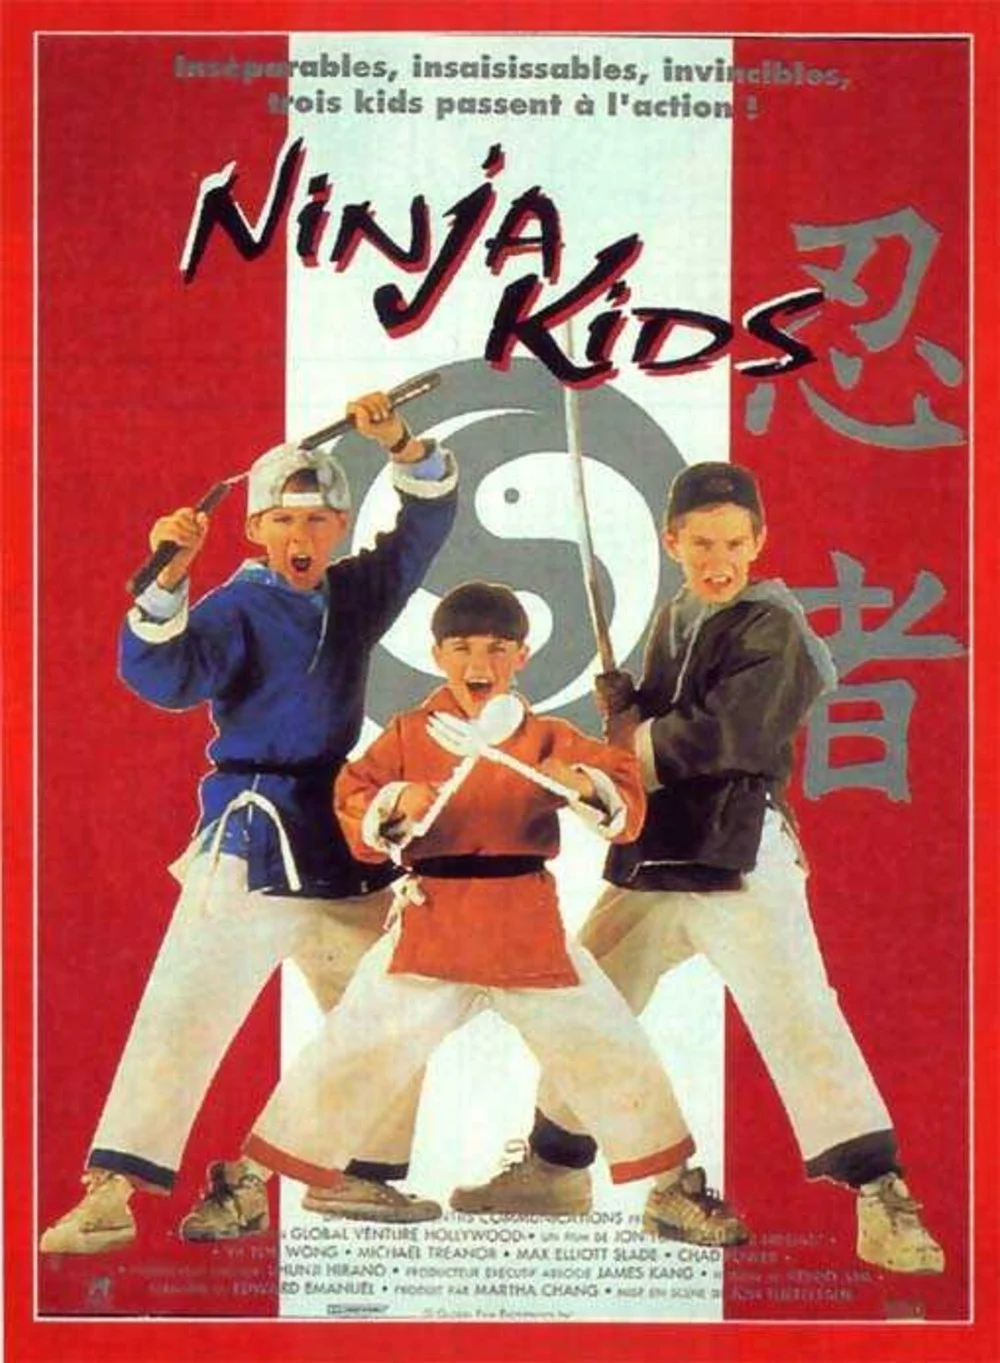 gktorrent Les 3 Ninjas - Ninja Kids (Integrale) FRENCH DVDRIP 1992-1998